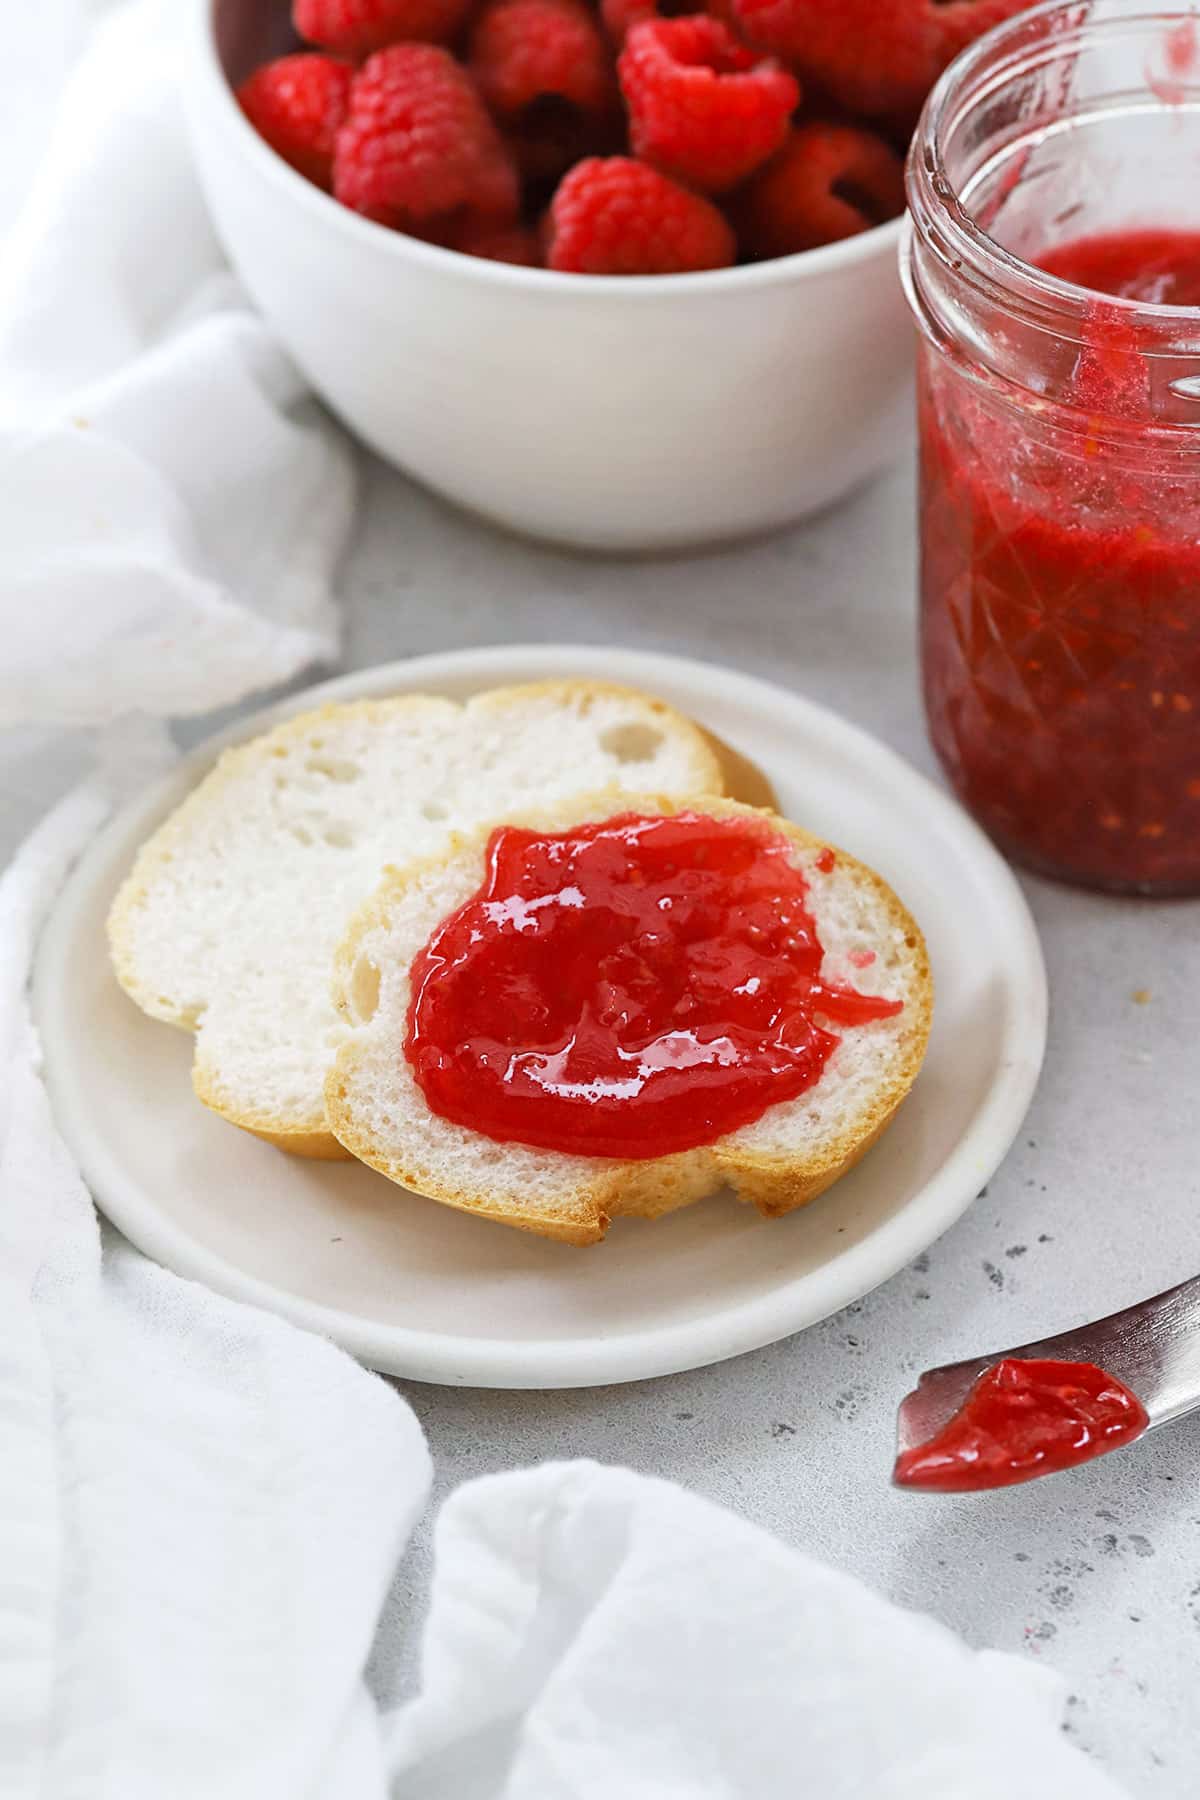 Freezer raspberry jam spread on gluten-free bread